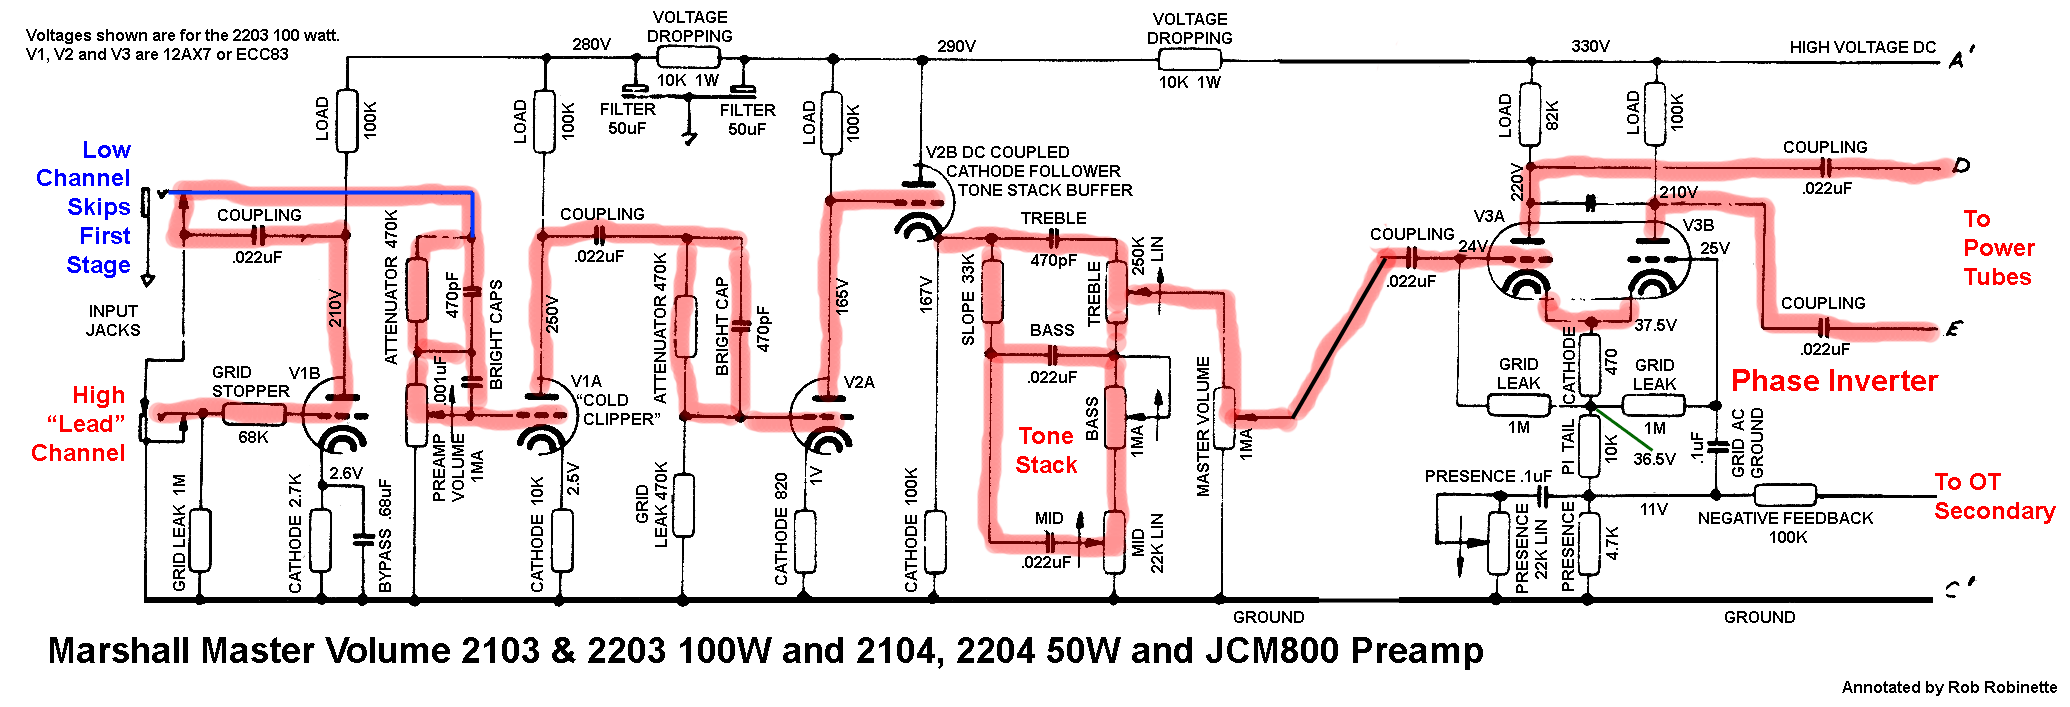 marshall jcm800 schematic